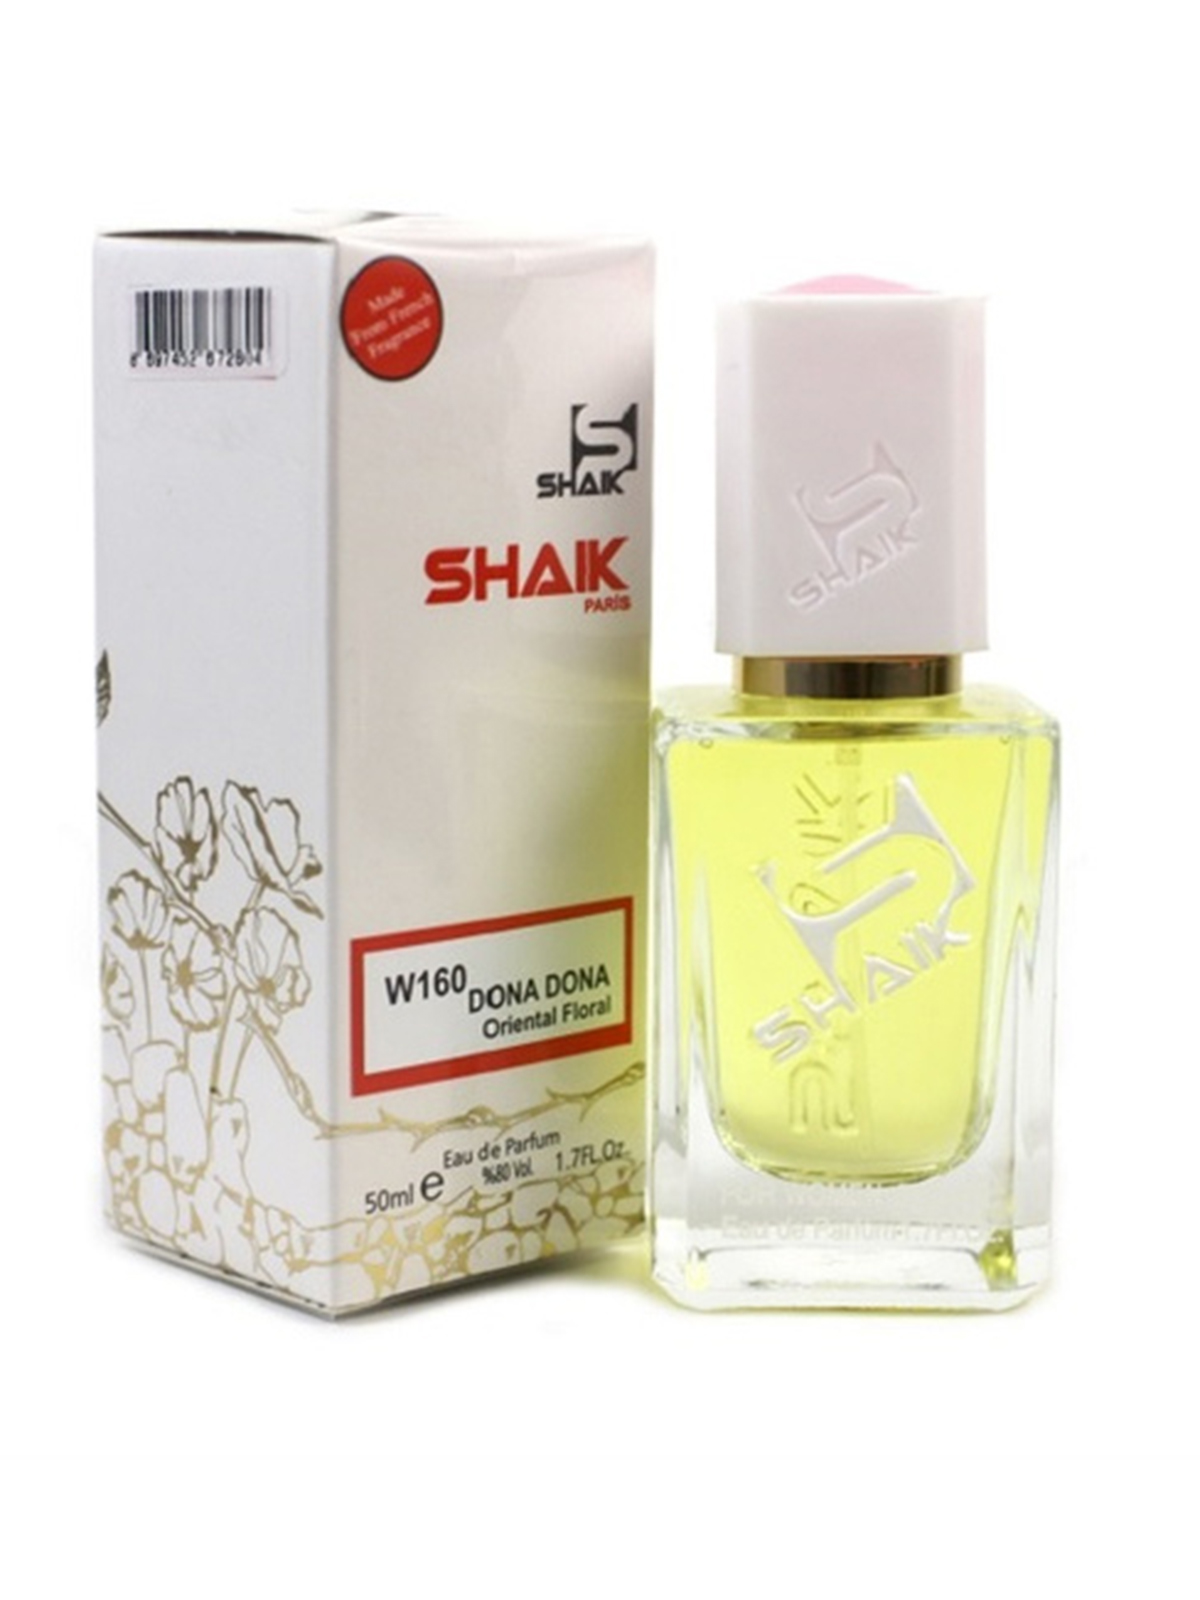 Shaik духи отзывы. Shaik w160. Shaik Парфюм 160. Shaik 50 ml. Духи Shaik oriental Floral.